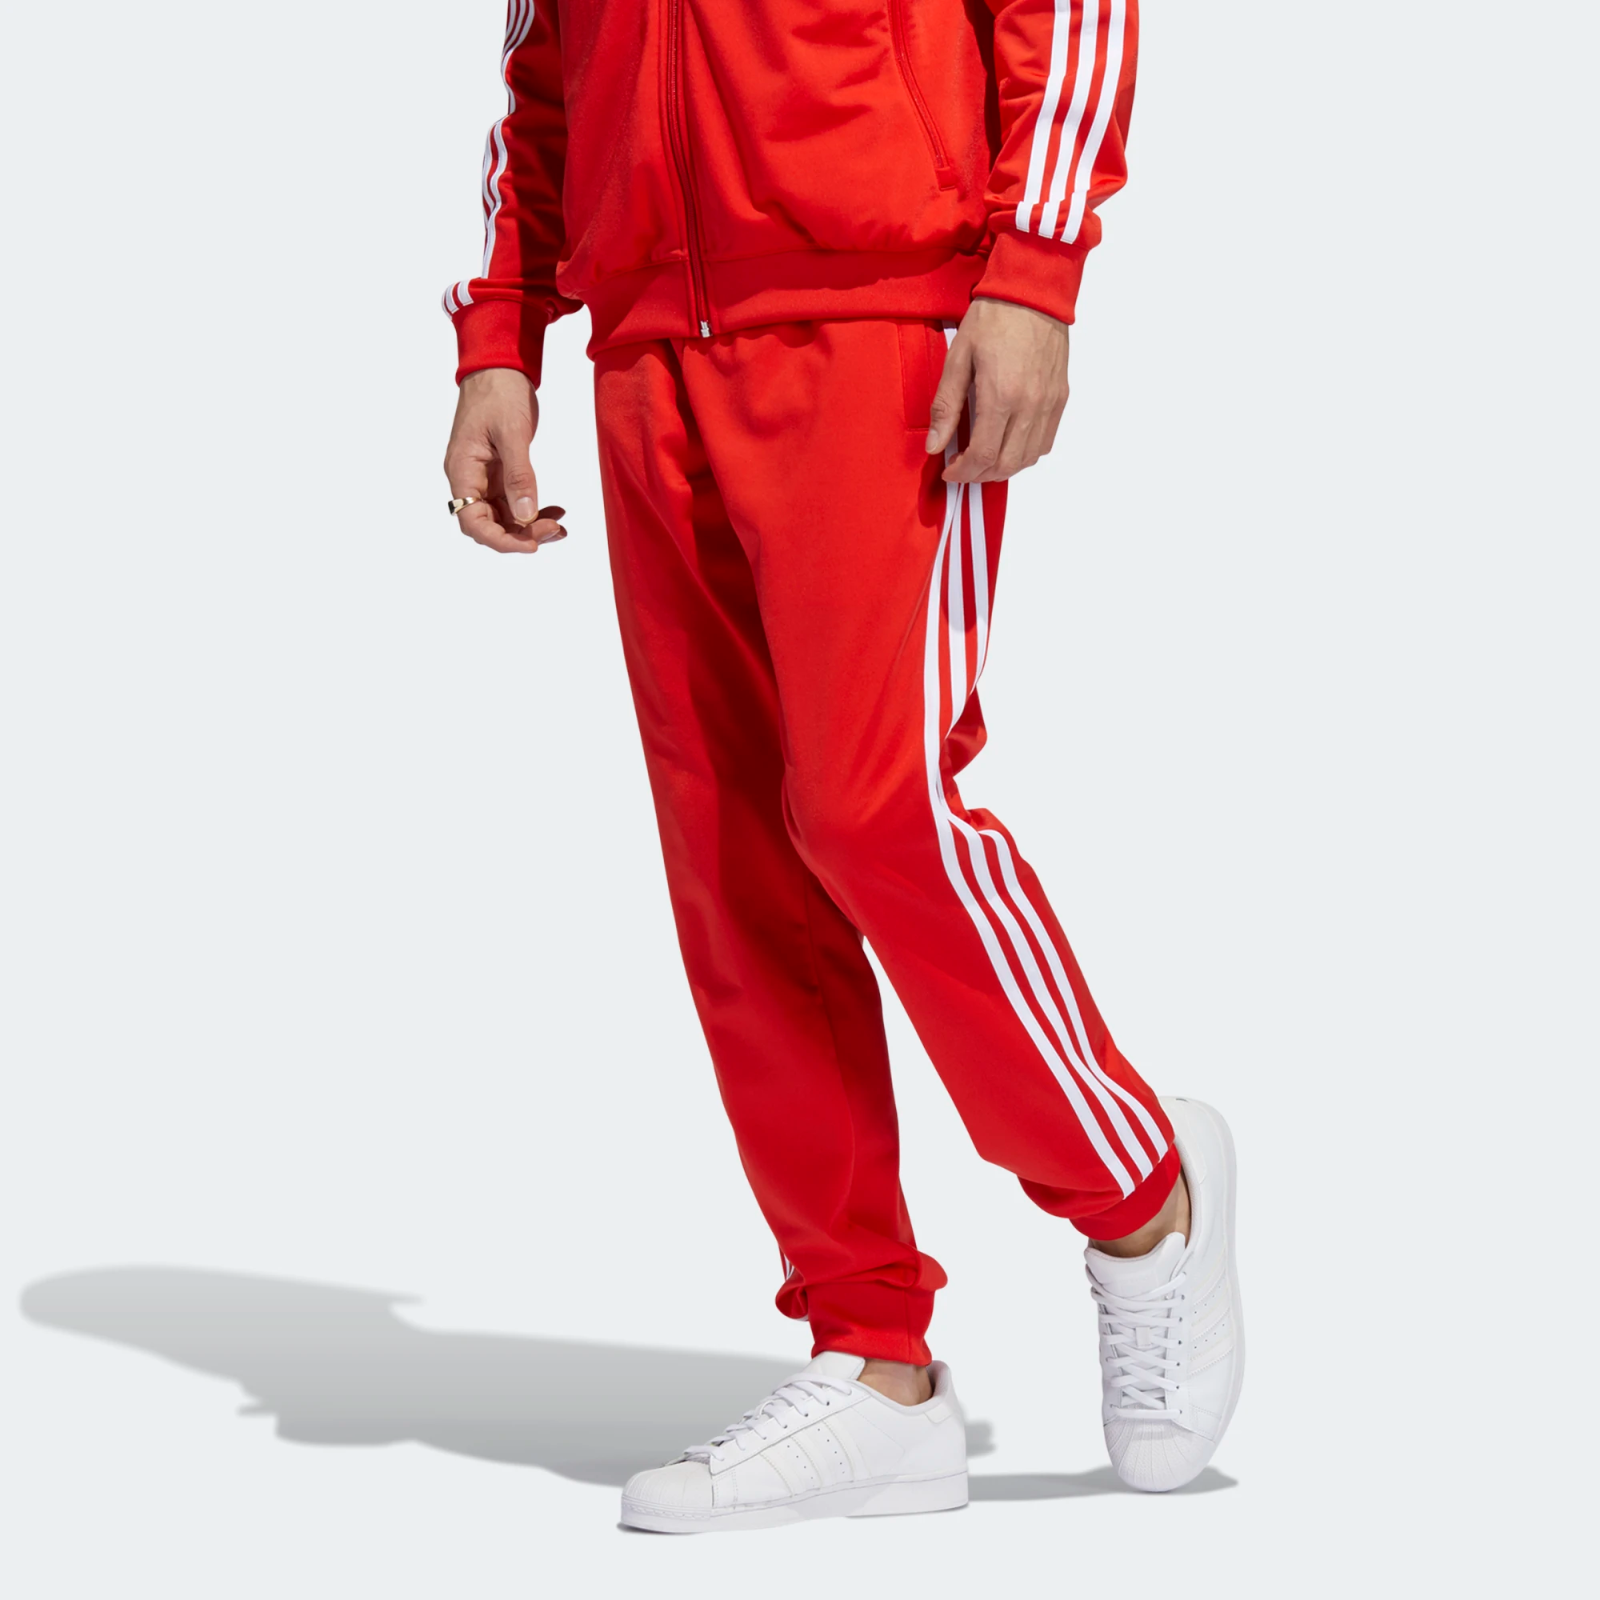 Adidas Originals Mens 3-Stripes Tracksuit Bottoms Red